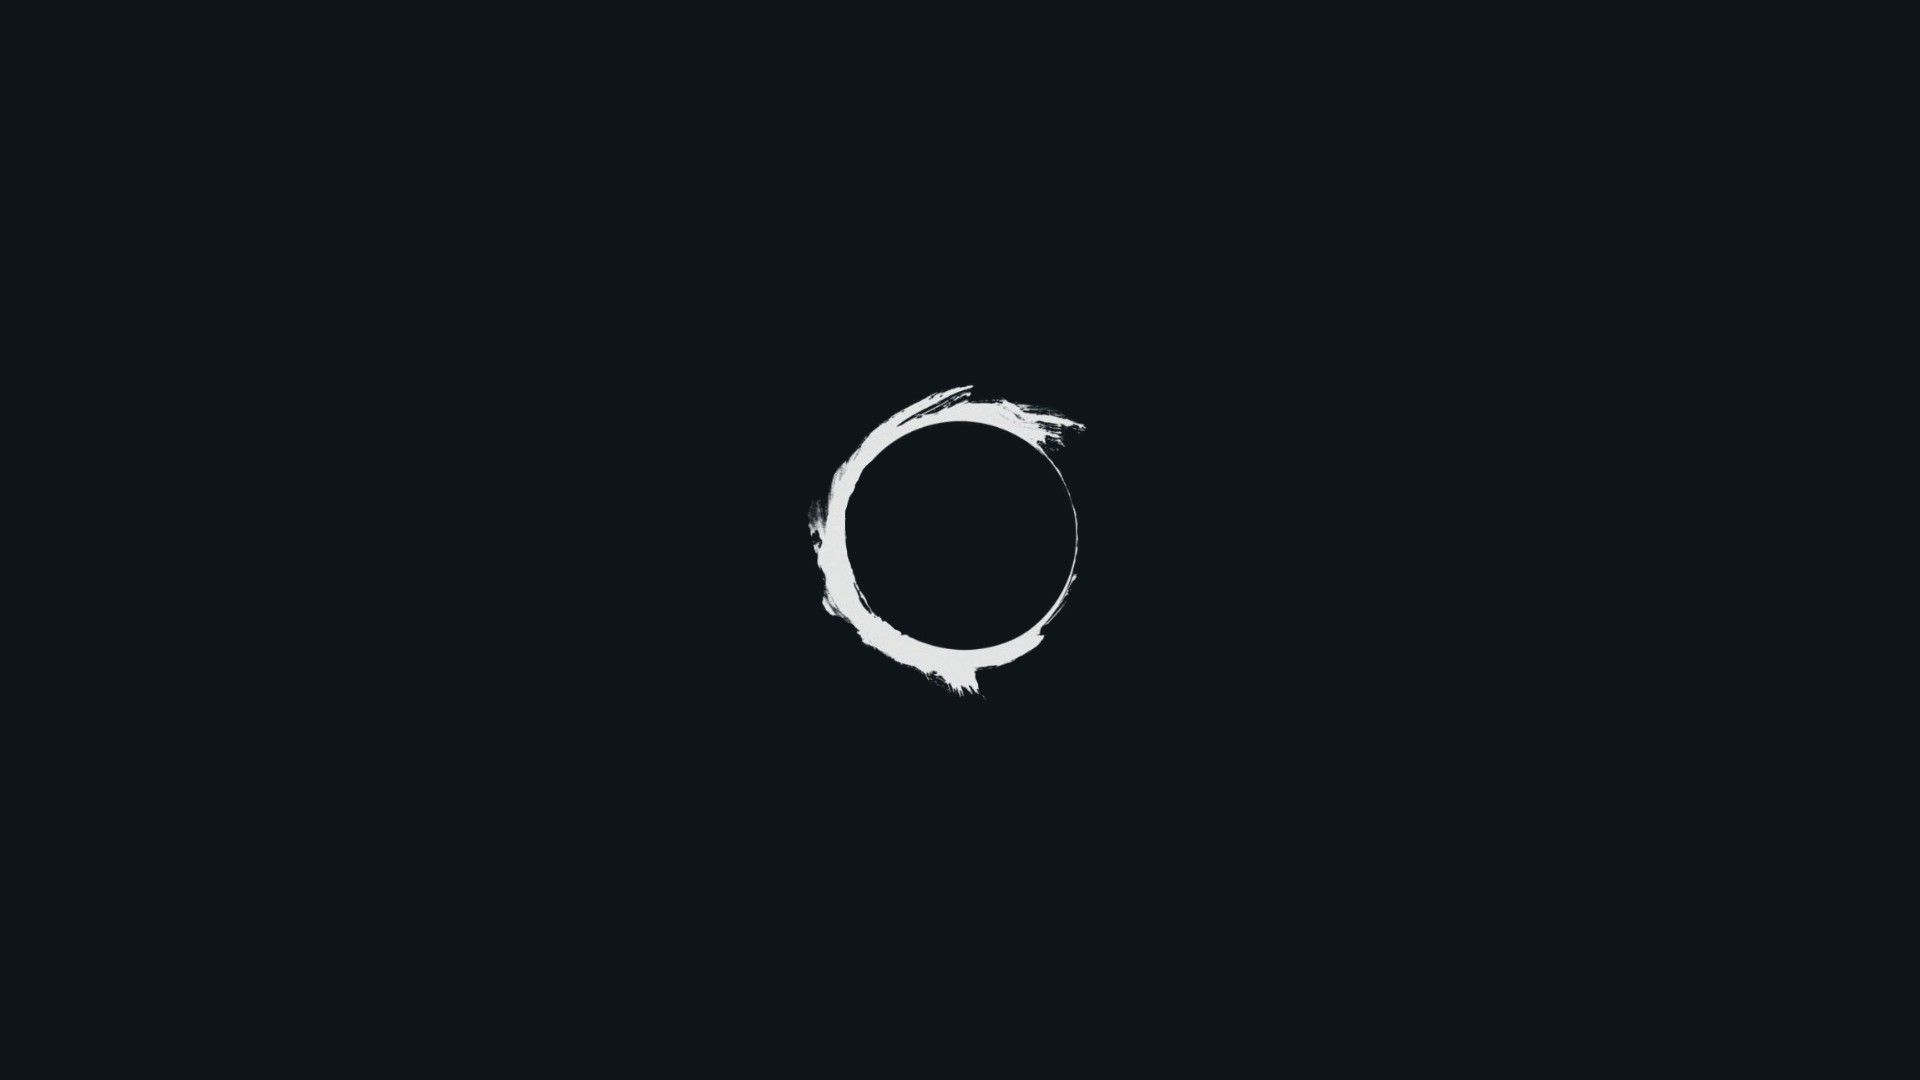 Son Lux, #lantern, #simple, #qi, #circle, #eclipse, #minimalism